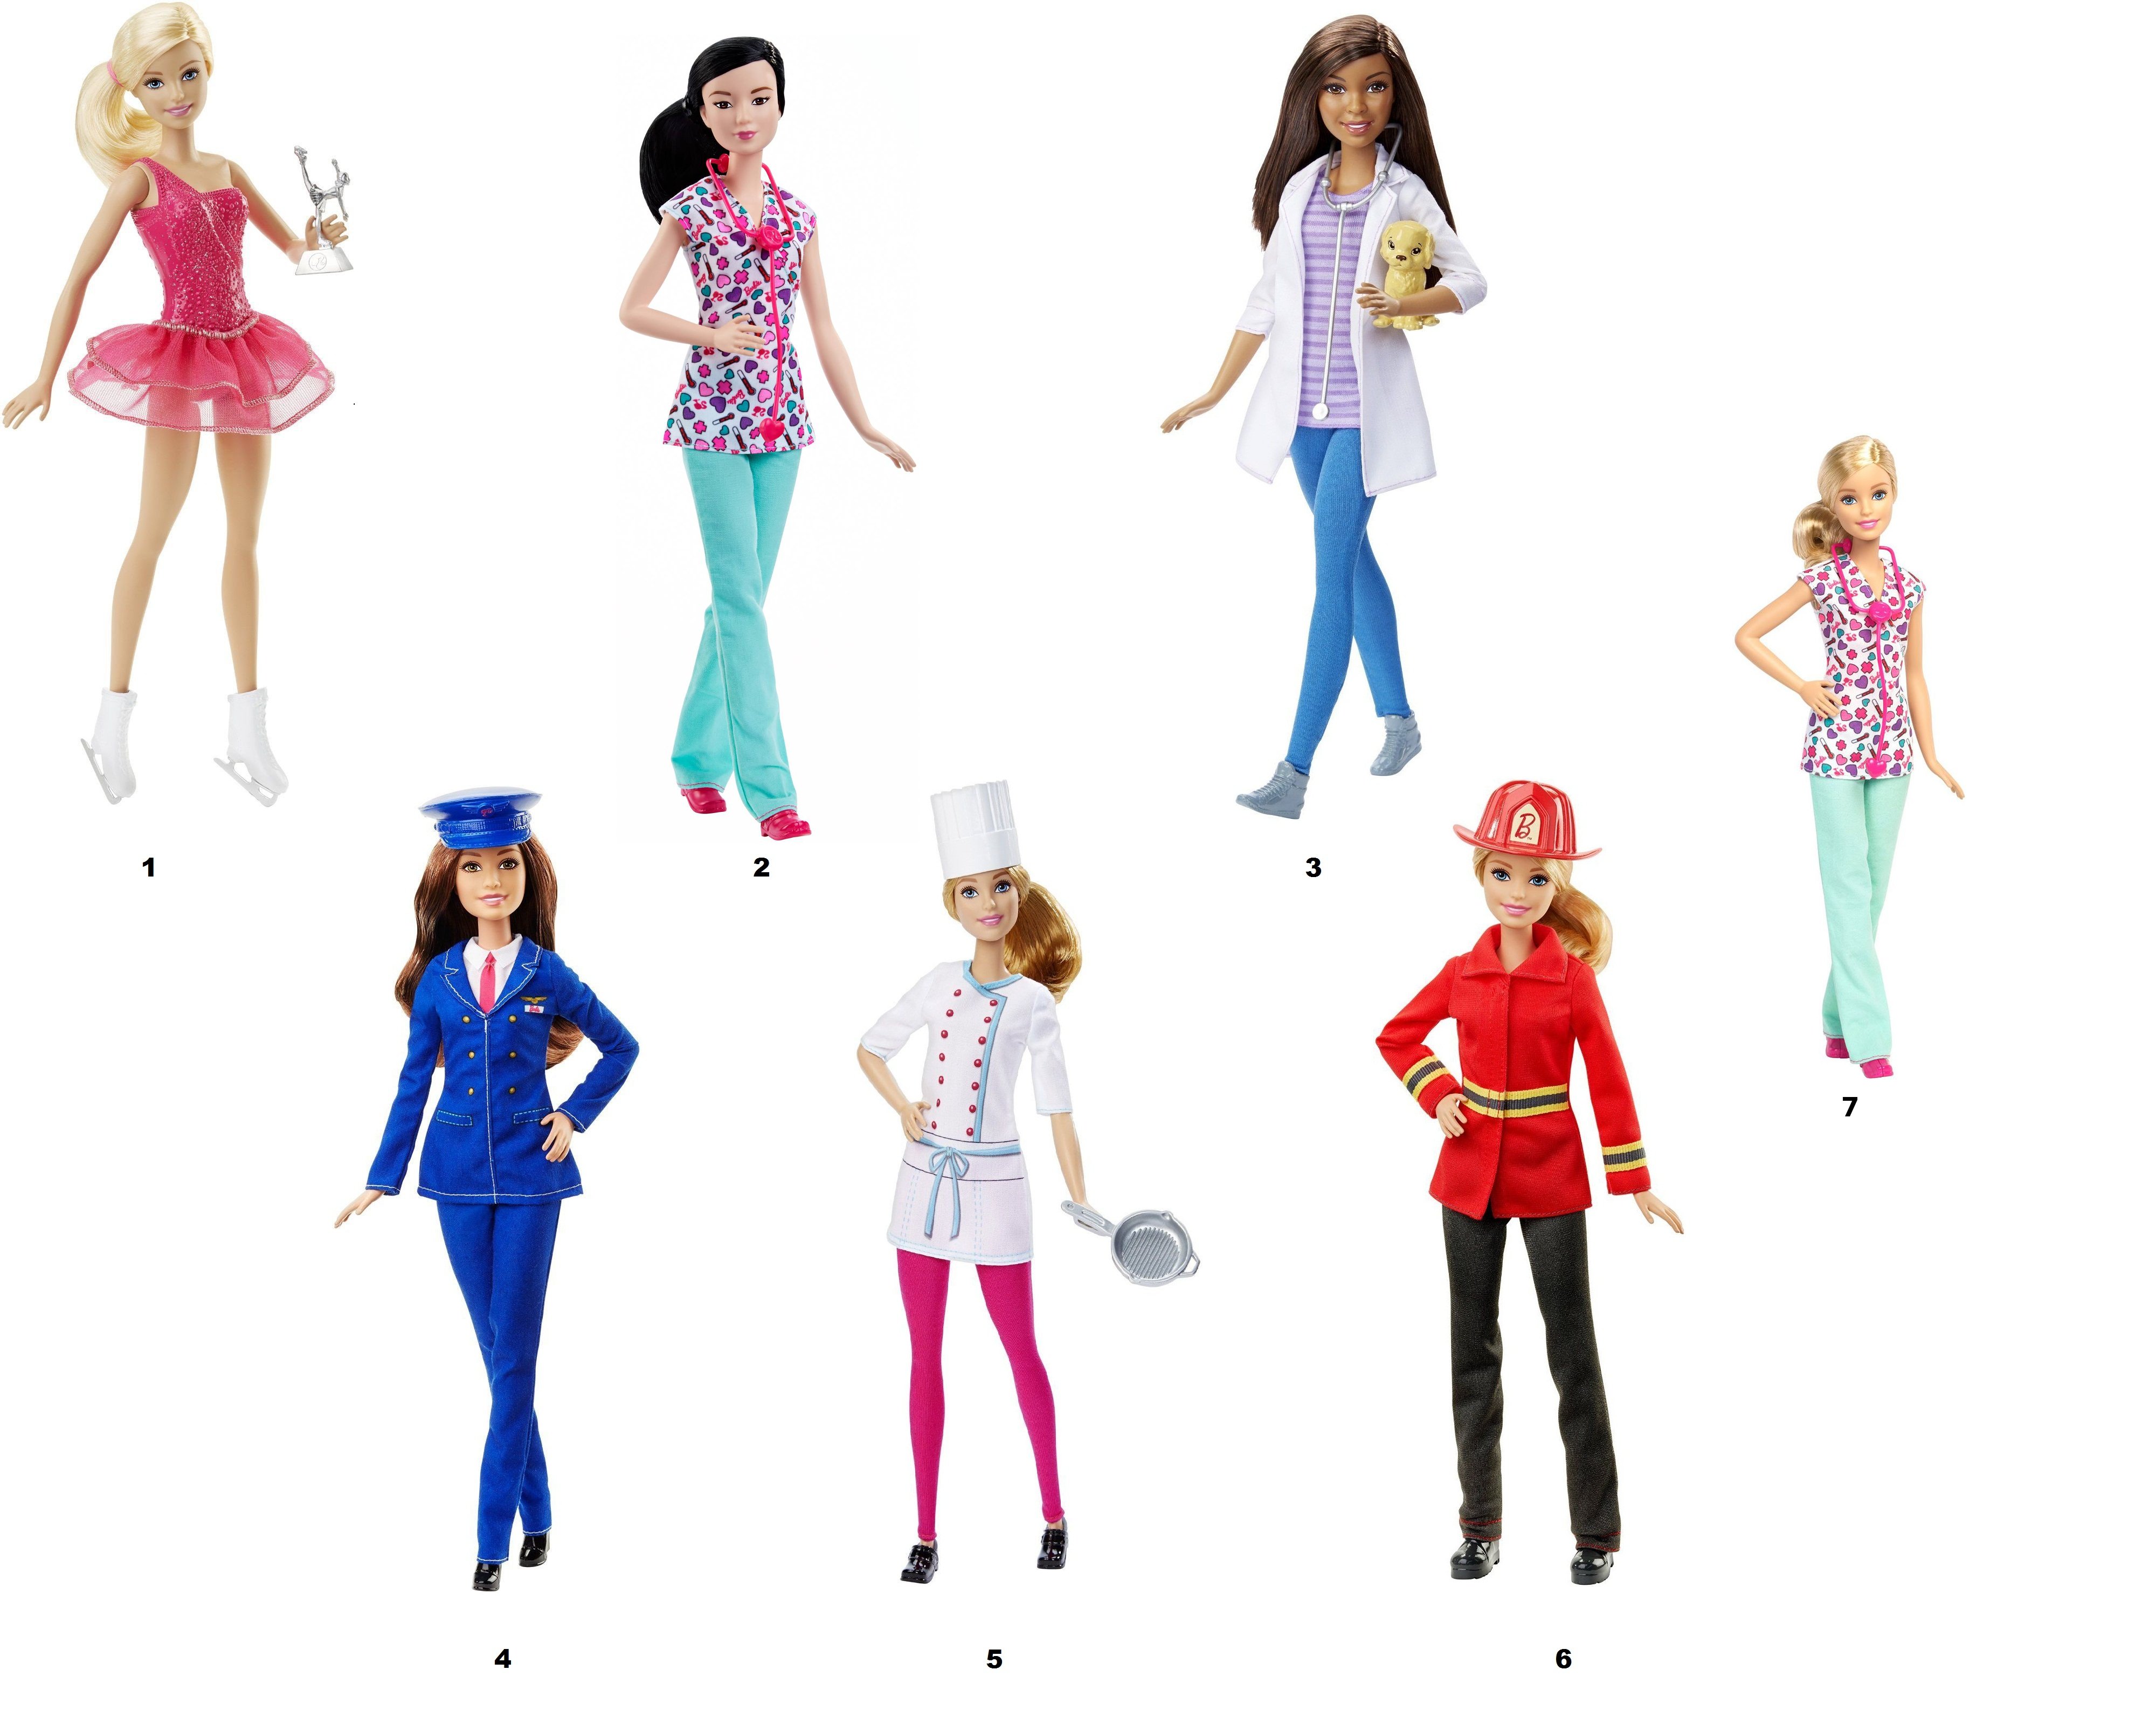 Барби 8 лет. Валберис кукла Барби. Кукла Барби профессии. Одежда для кукол Барби профессии. Барби разные профессии.